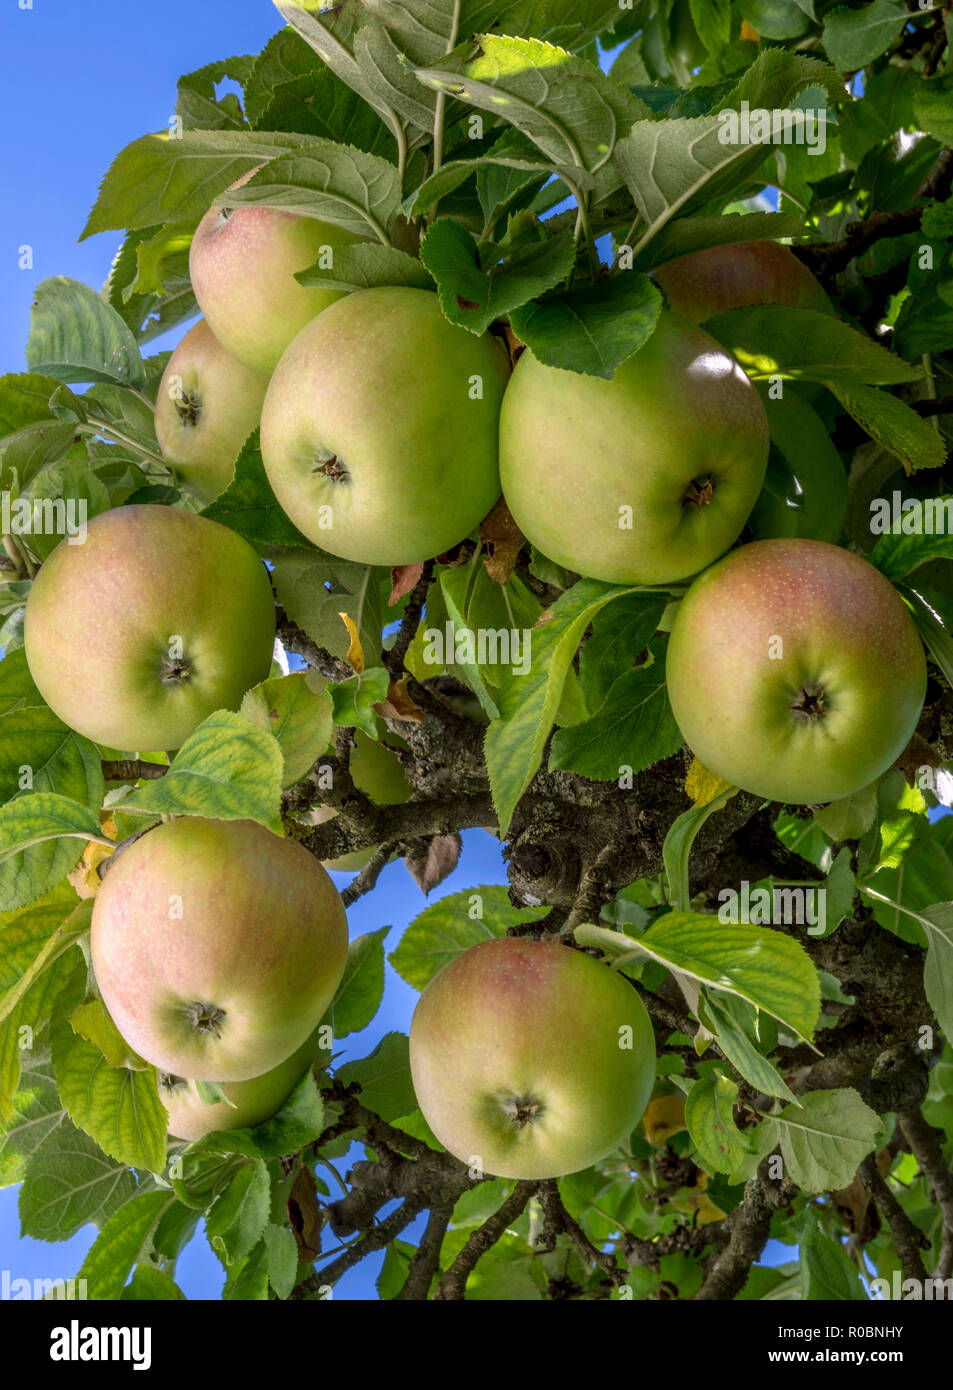 Organic Granny Smith Apples - Apples & Apple Pears